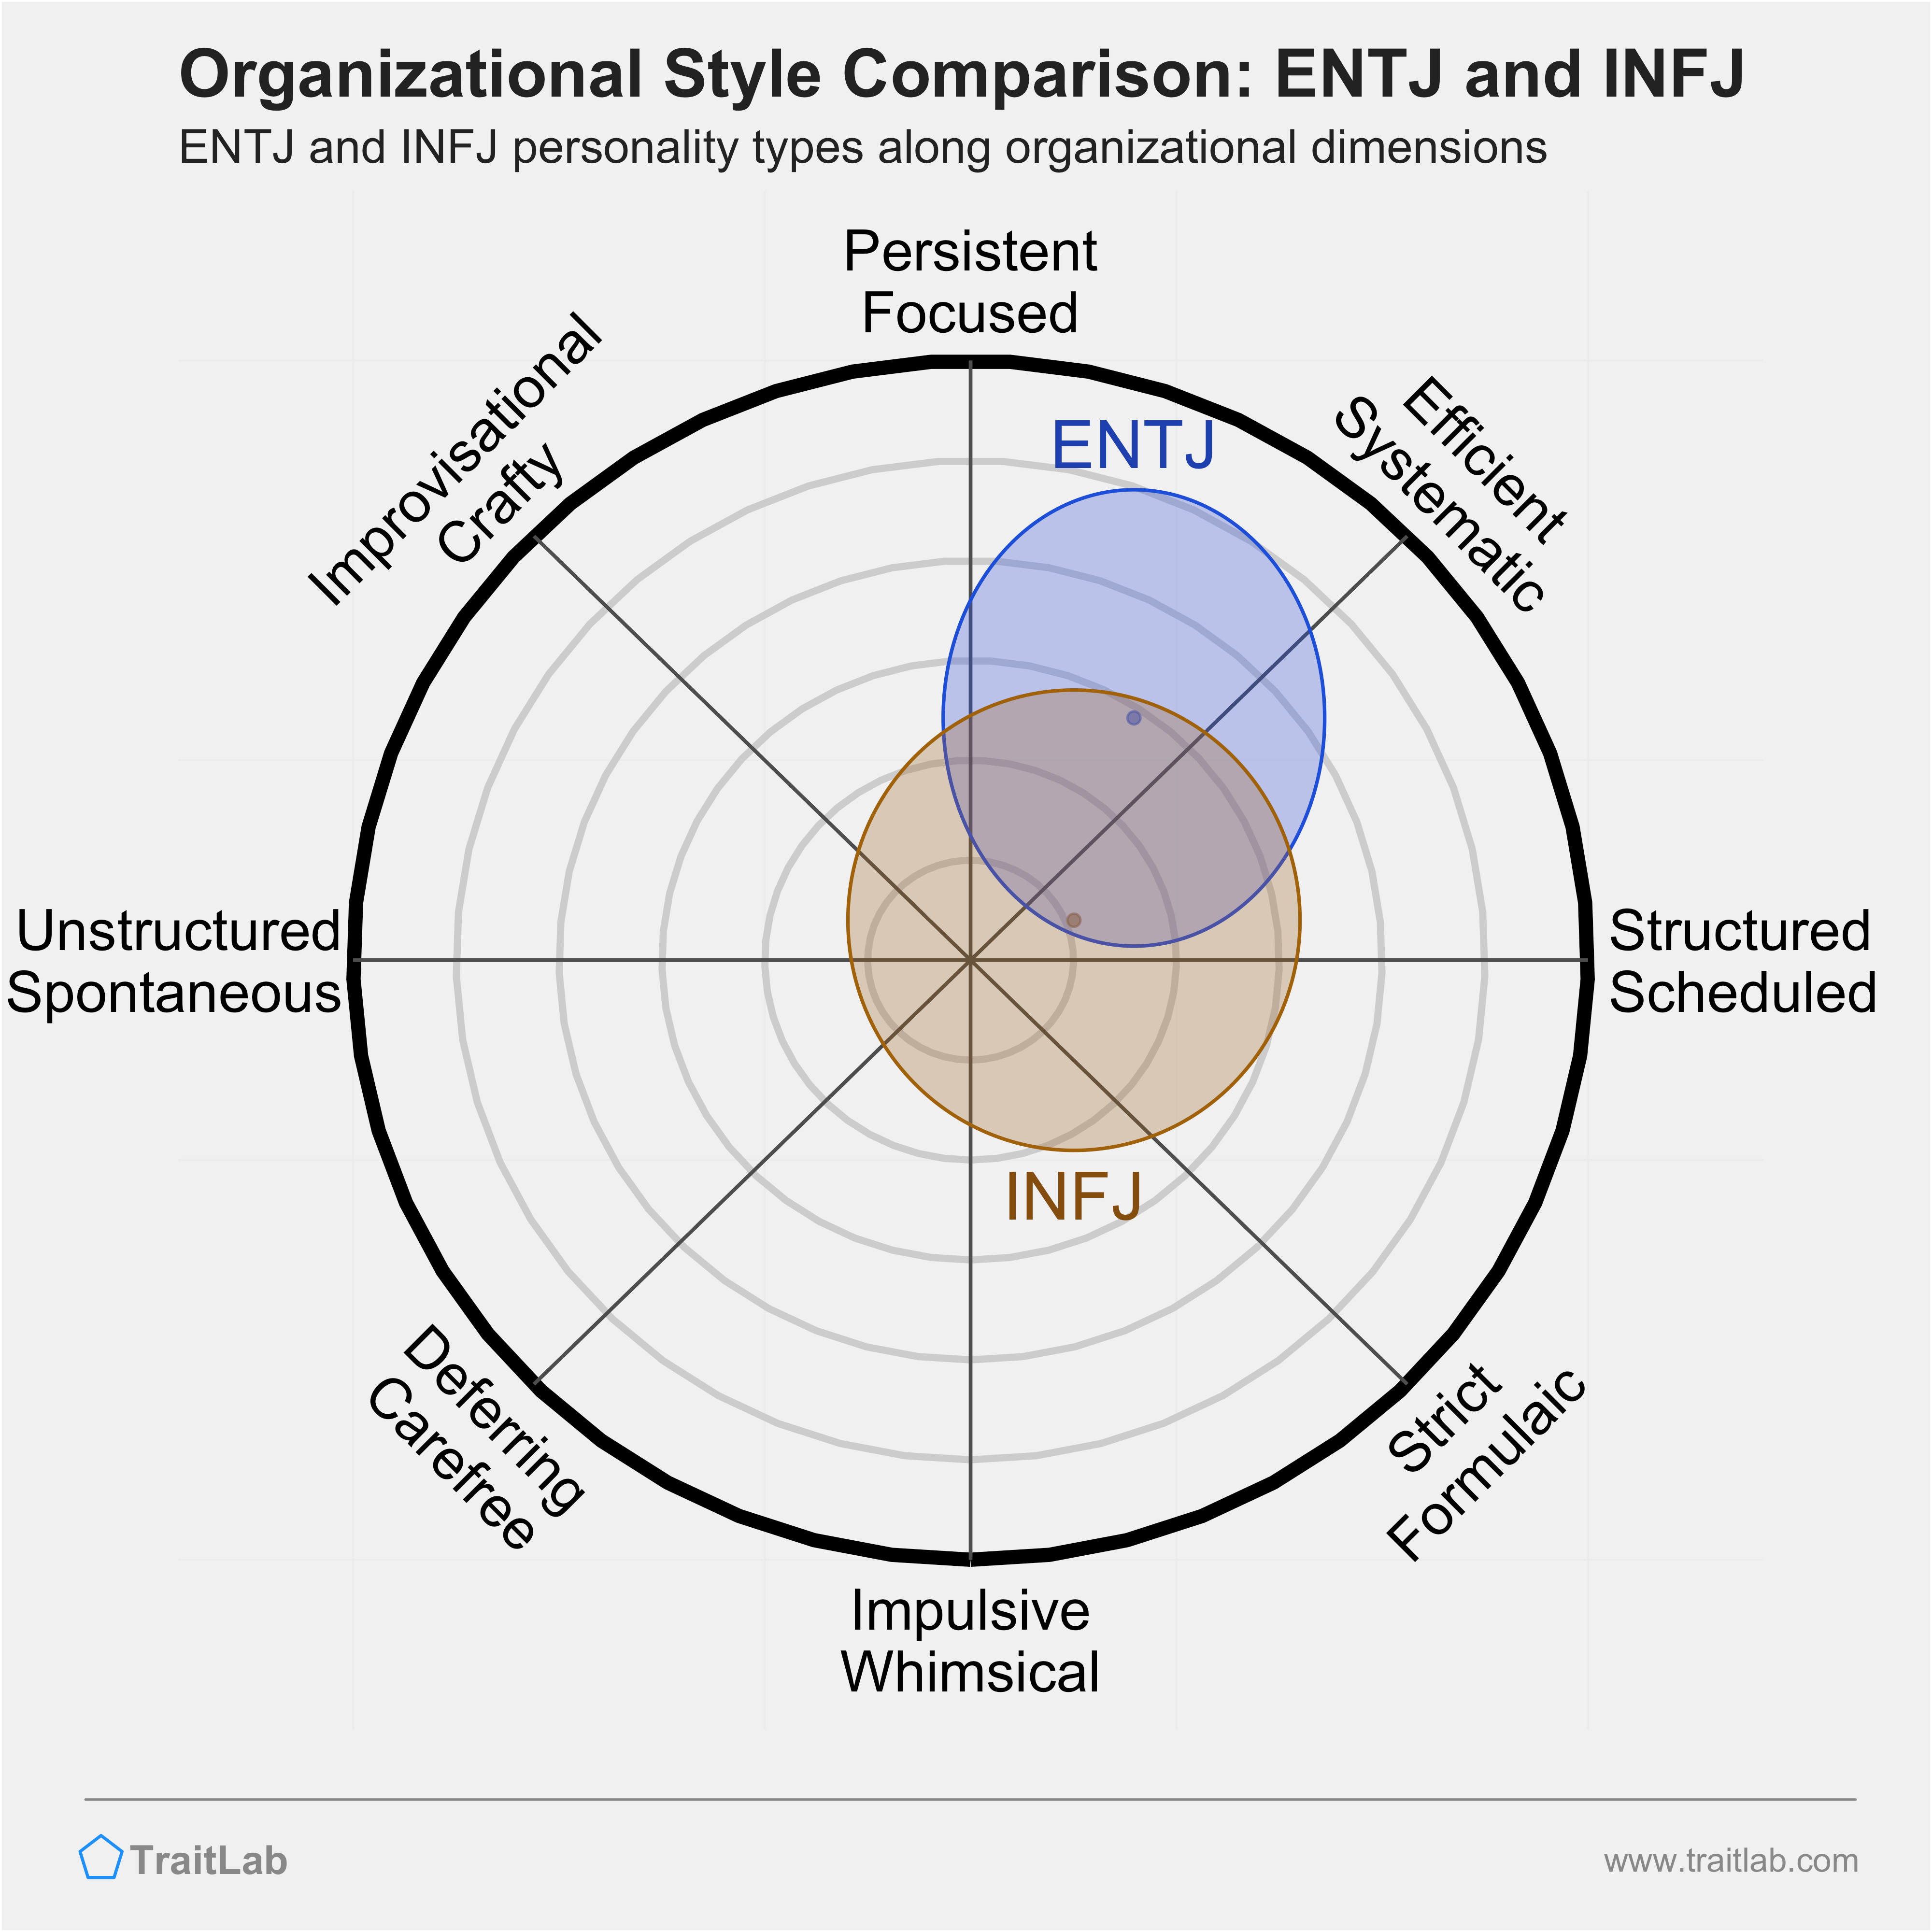 ENTJ and INFJ comparison across organizational dimensions